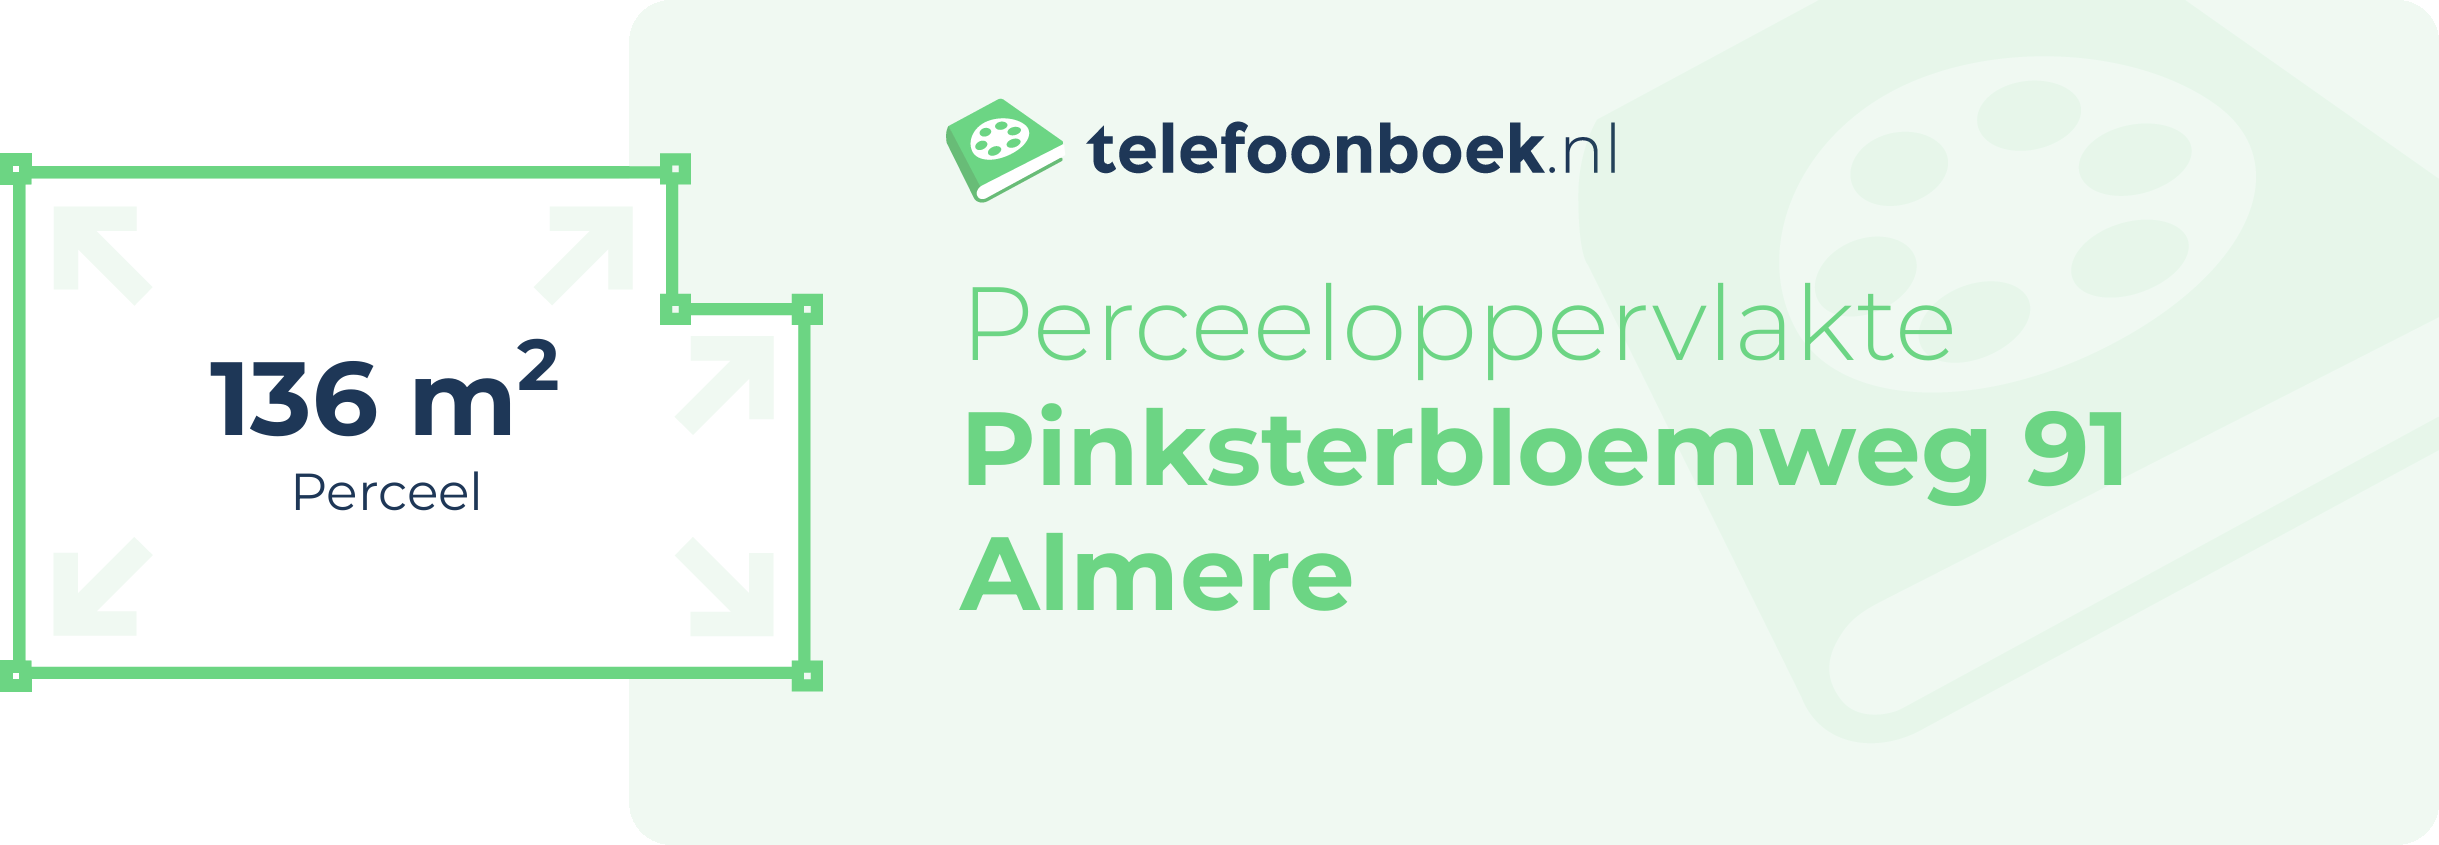 Perceeloppervlakte Pinksterbloemweg 91 Almere